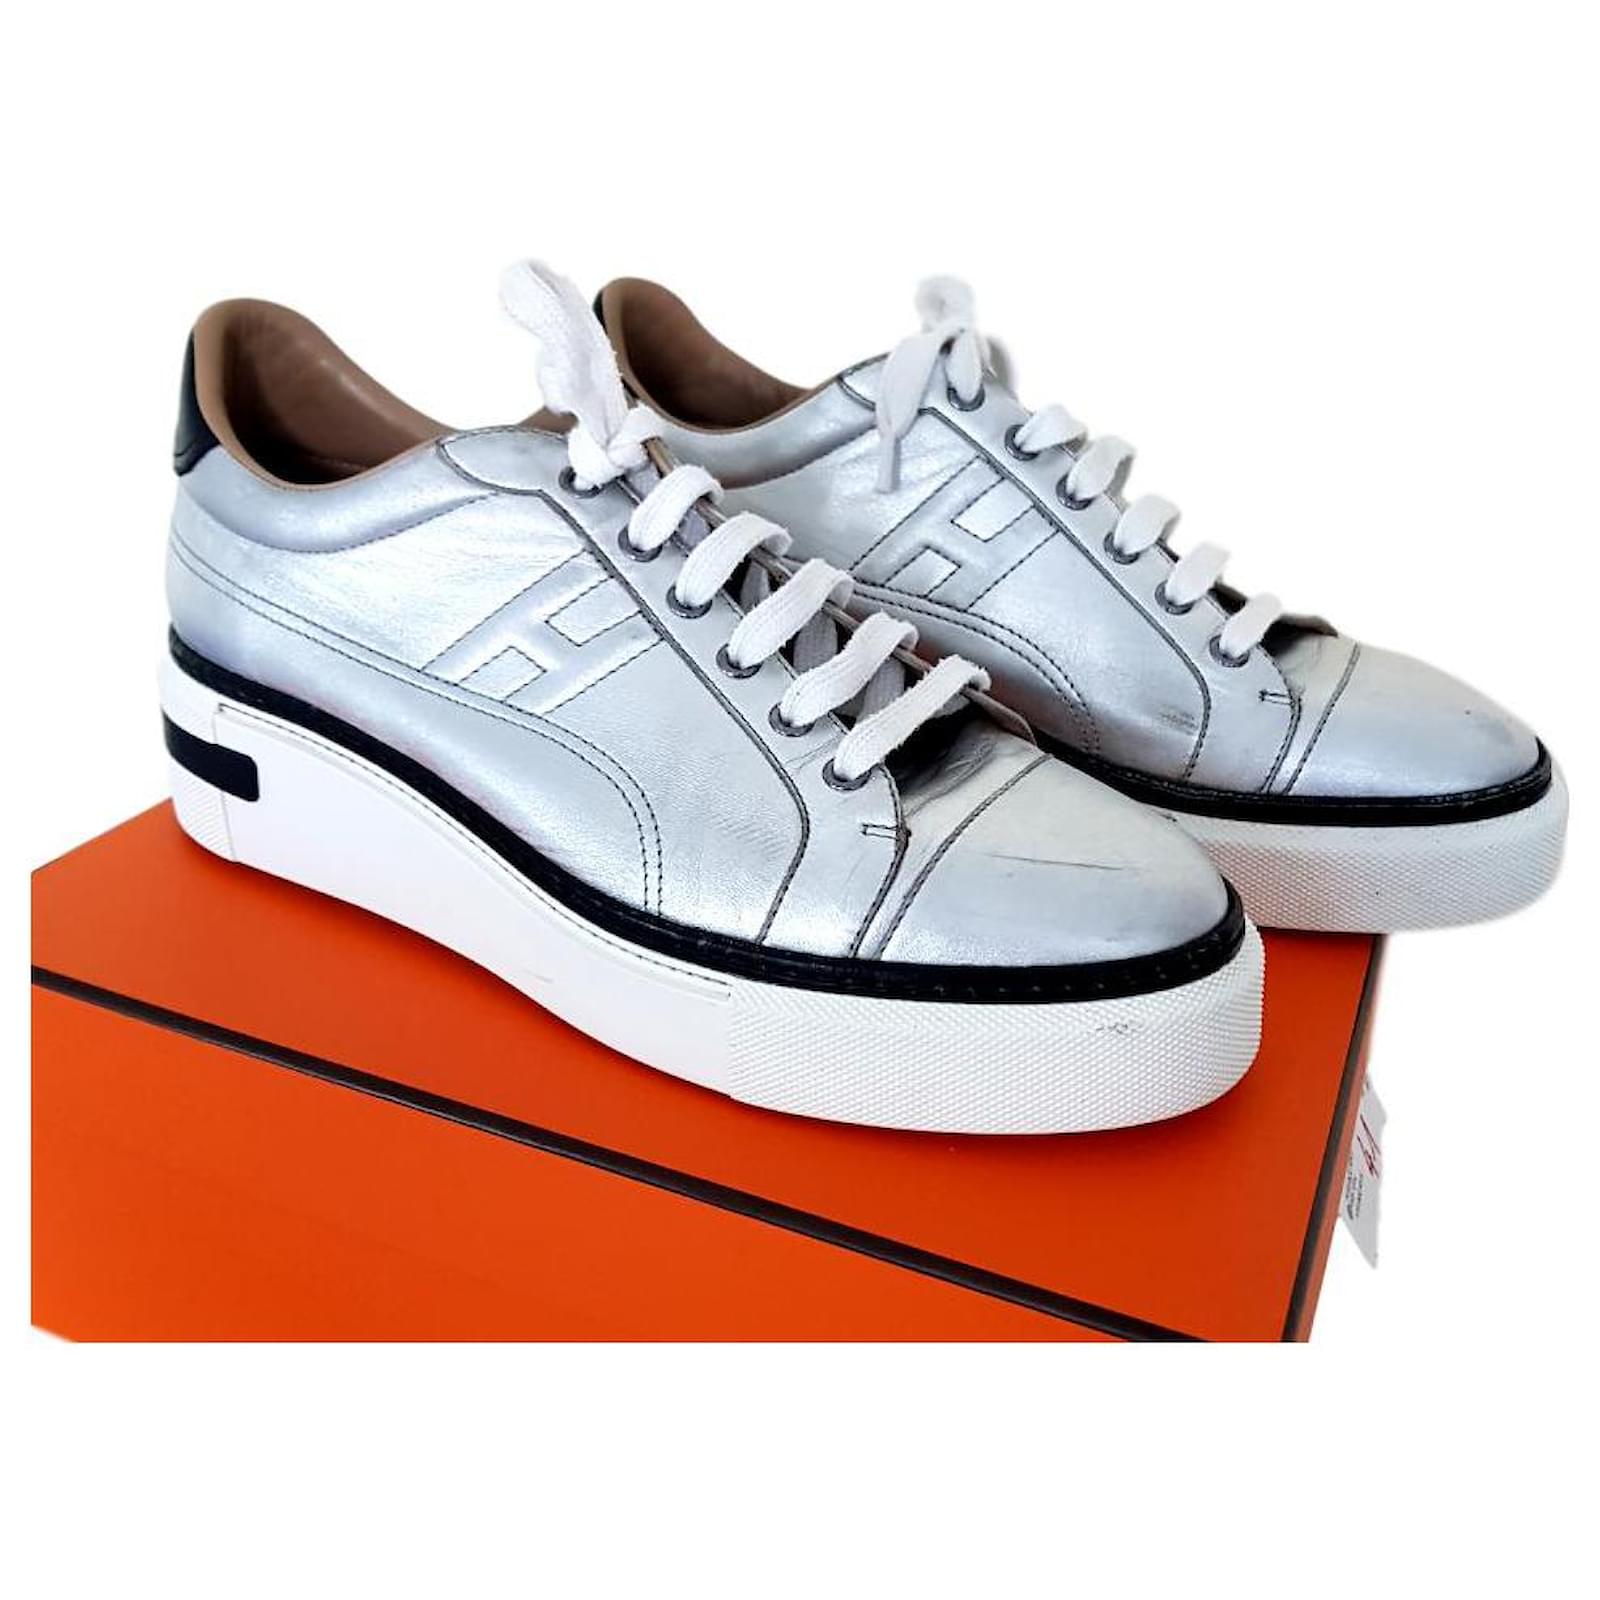 hermes polo sneakers white